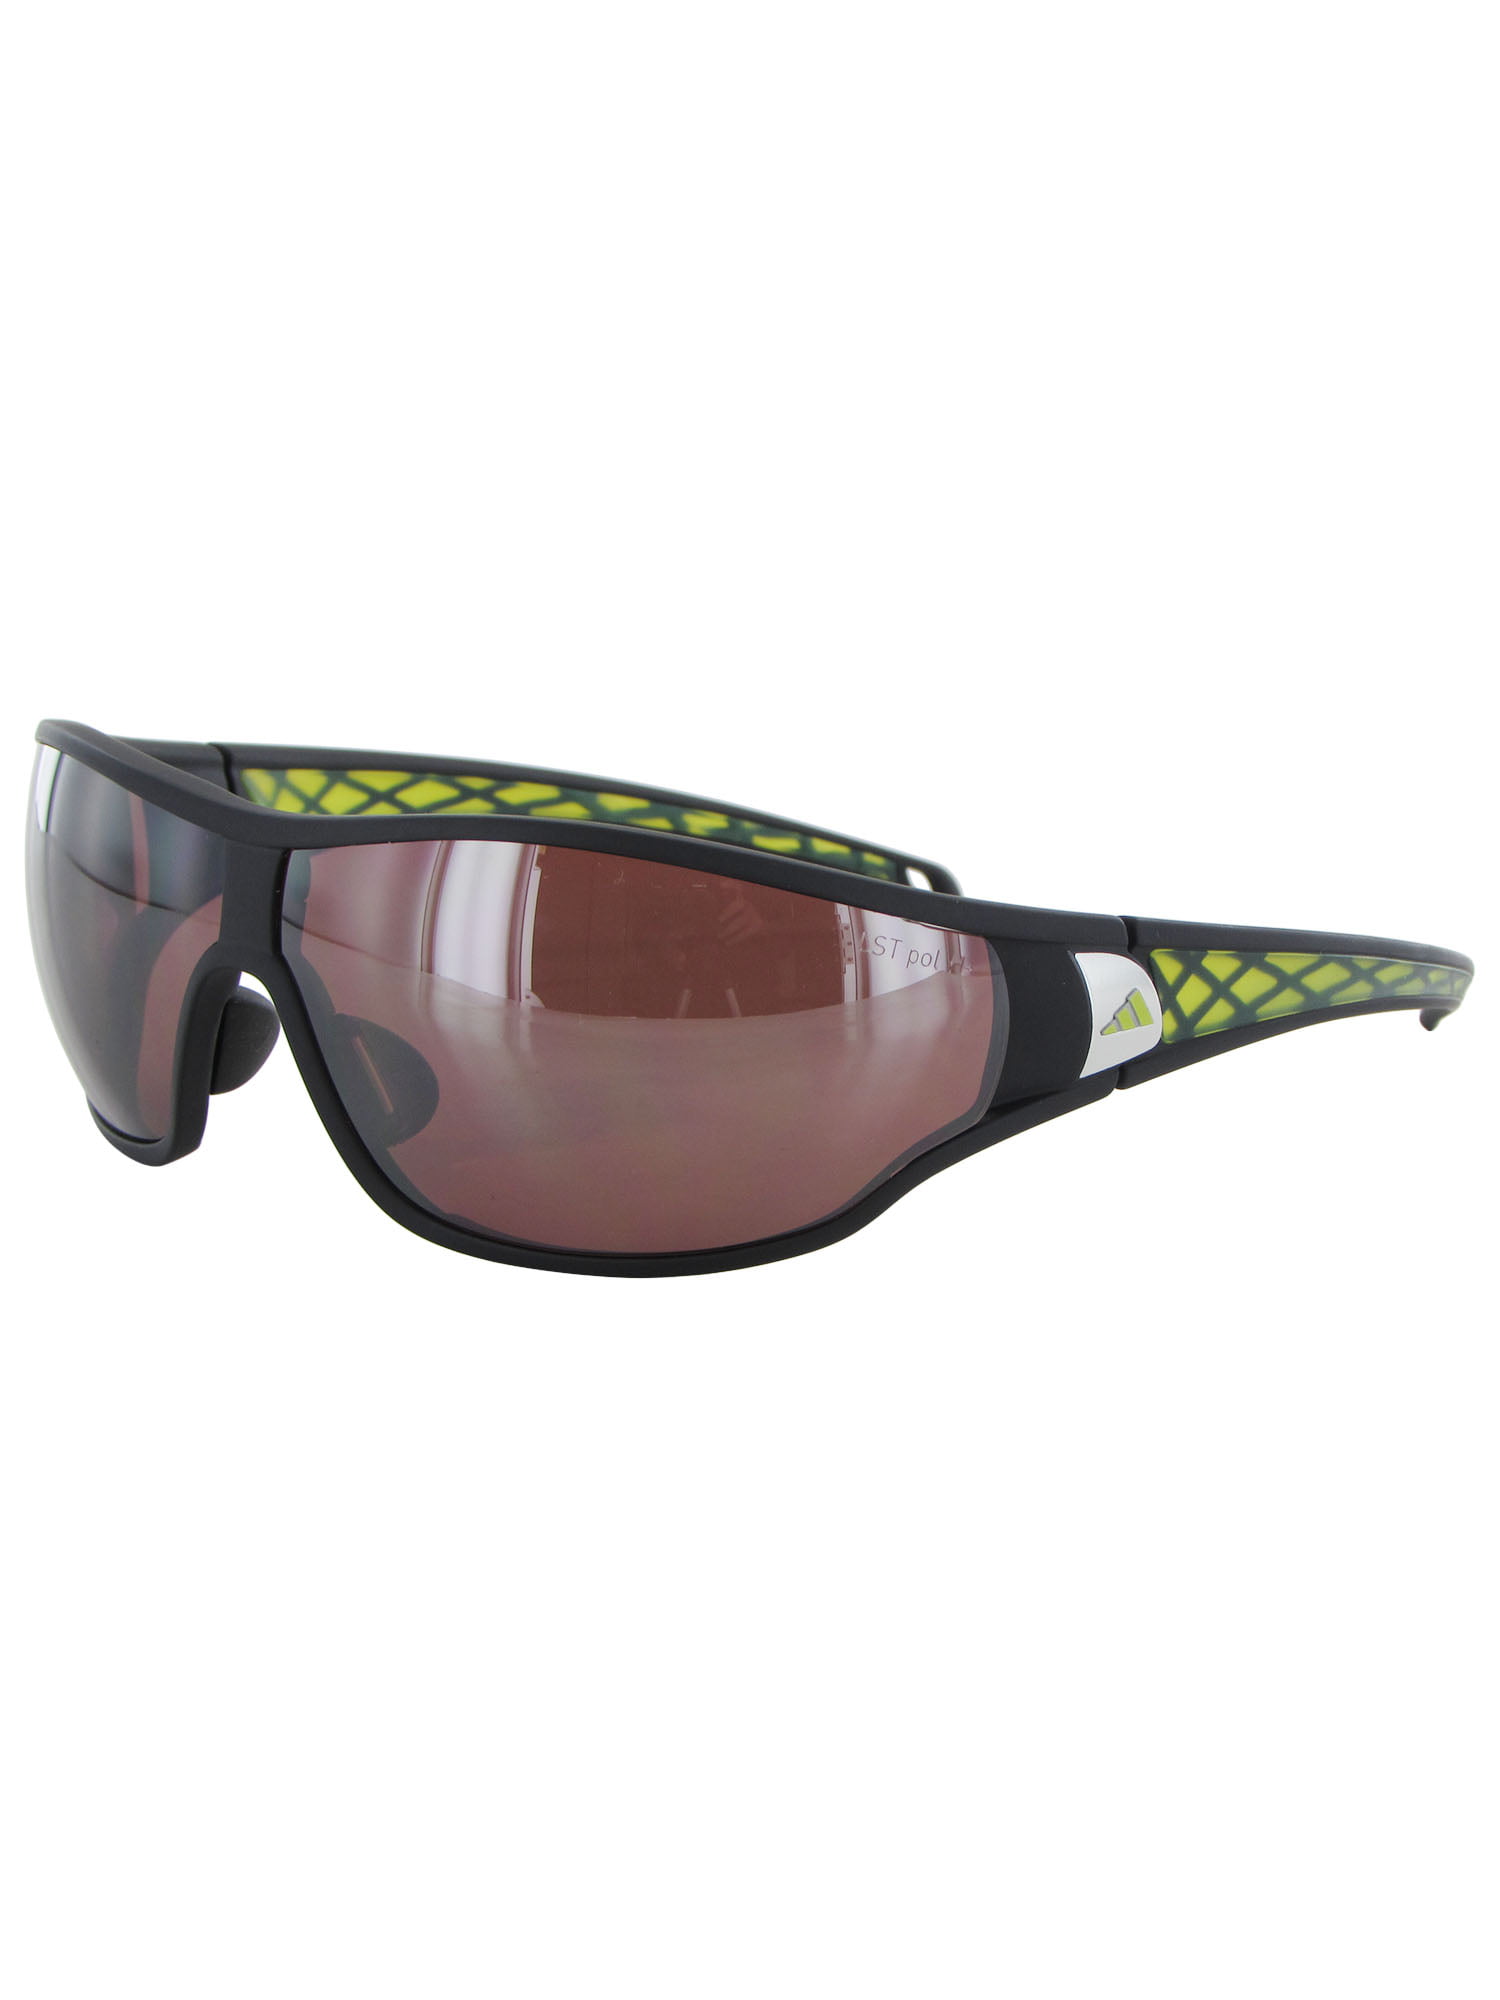 patroon Oprechtheid natuurlijk Adidas Tycane Pro L Polarized Sunglasses, Matte Black/Lab Lime - Walmart.com